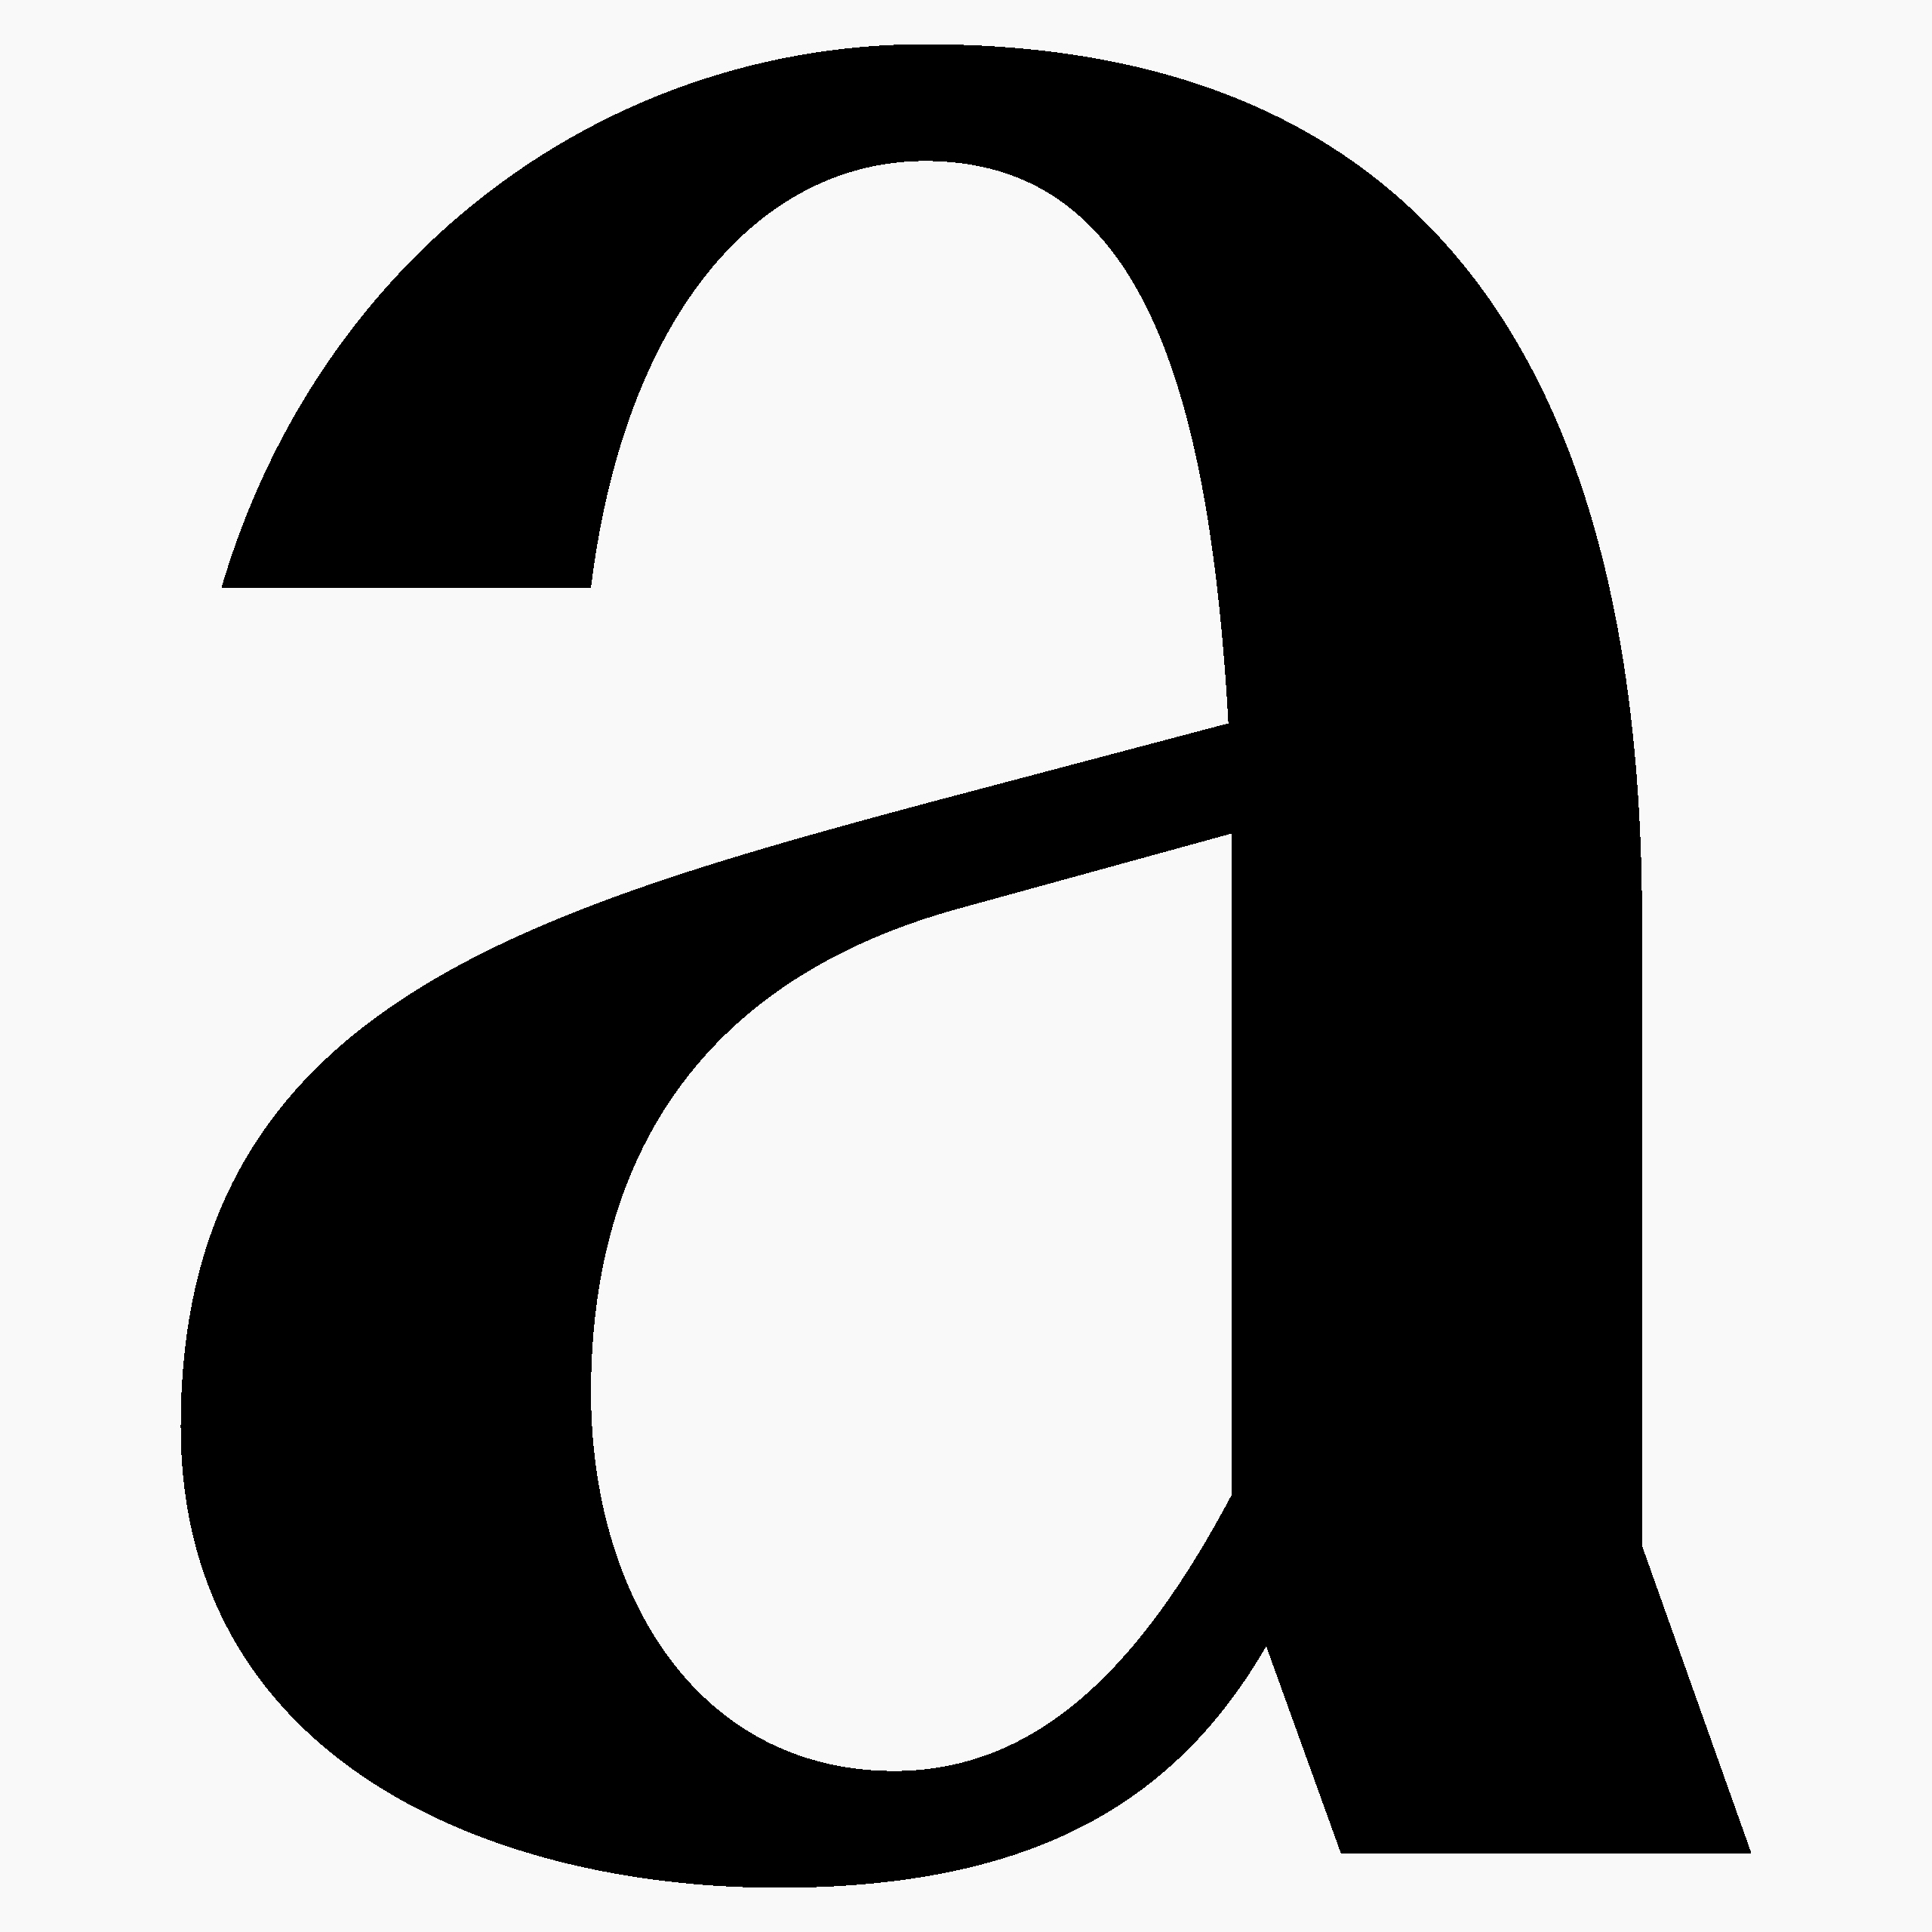 Daniel-Stuhlpfarrer_typedesign_graphicdesign_custom-font_custom-typeface_typography_Delia-Baum_Kasanowa_2